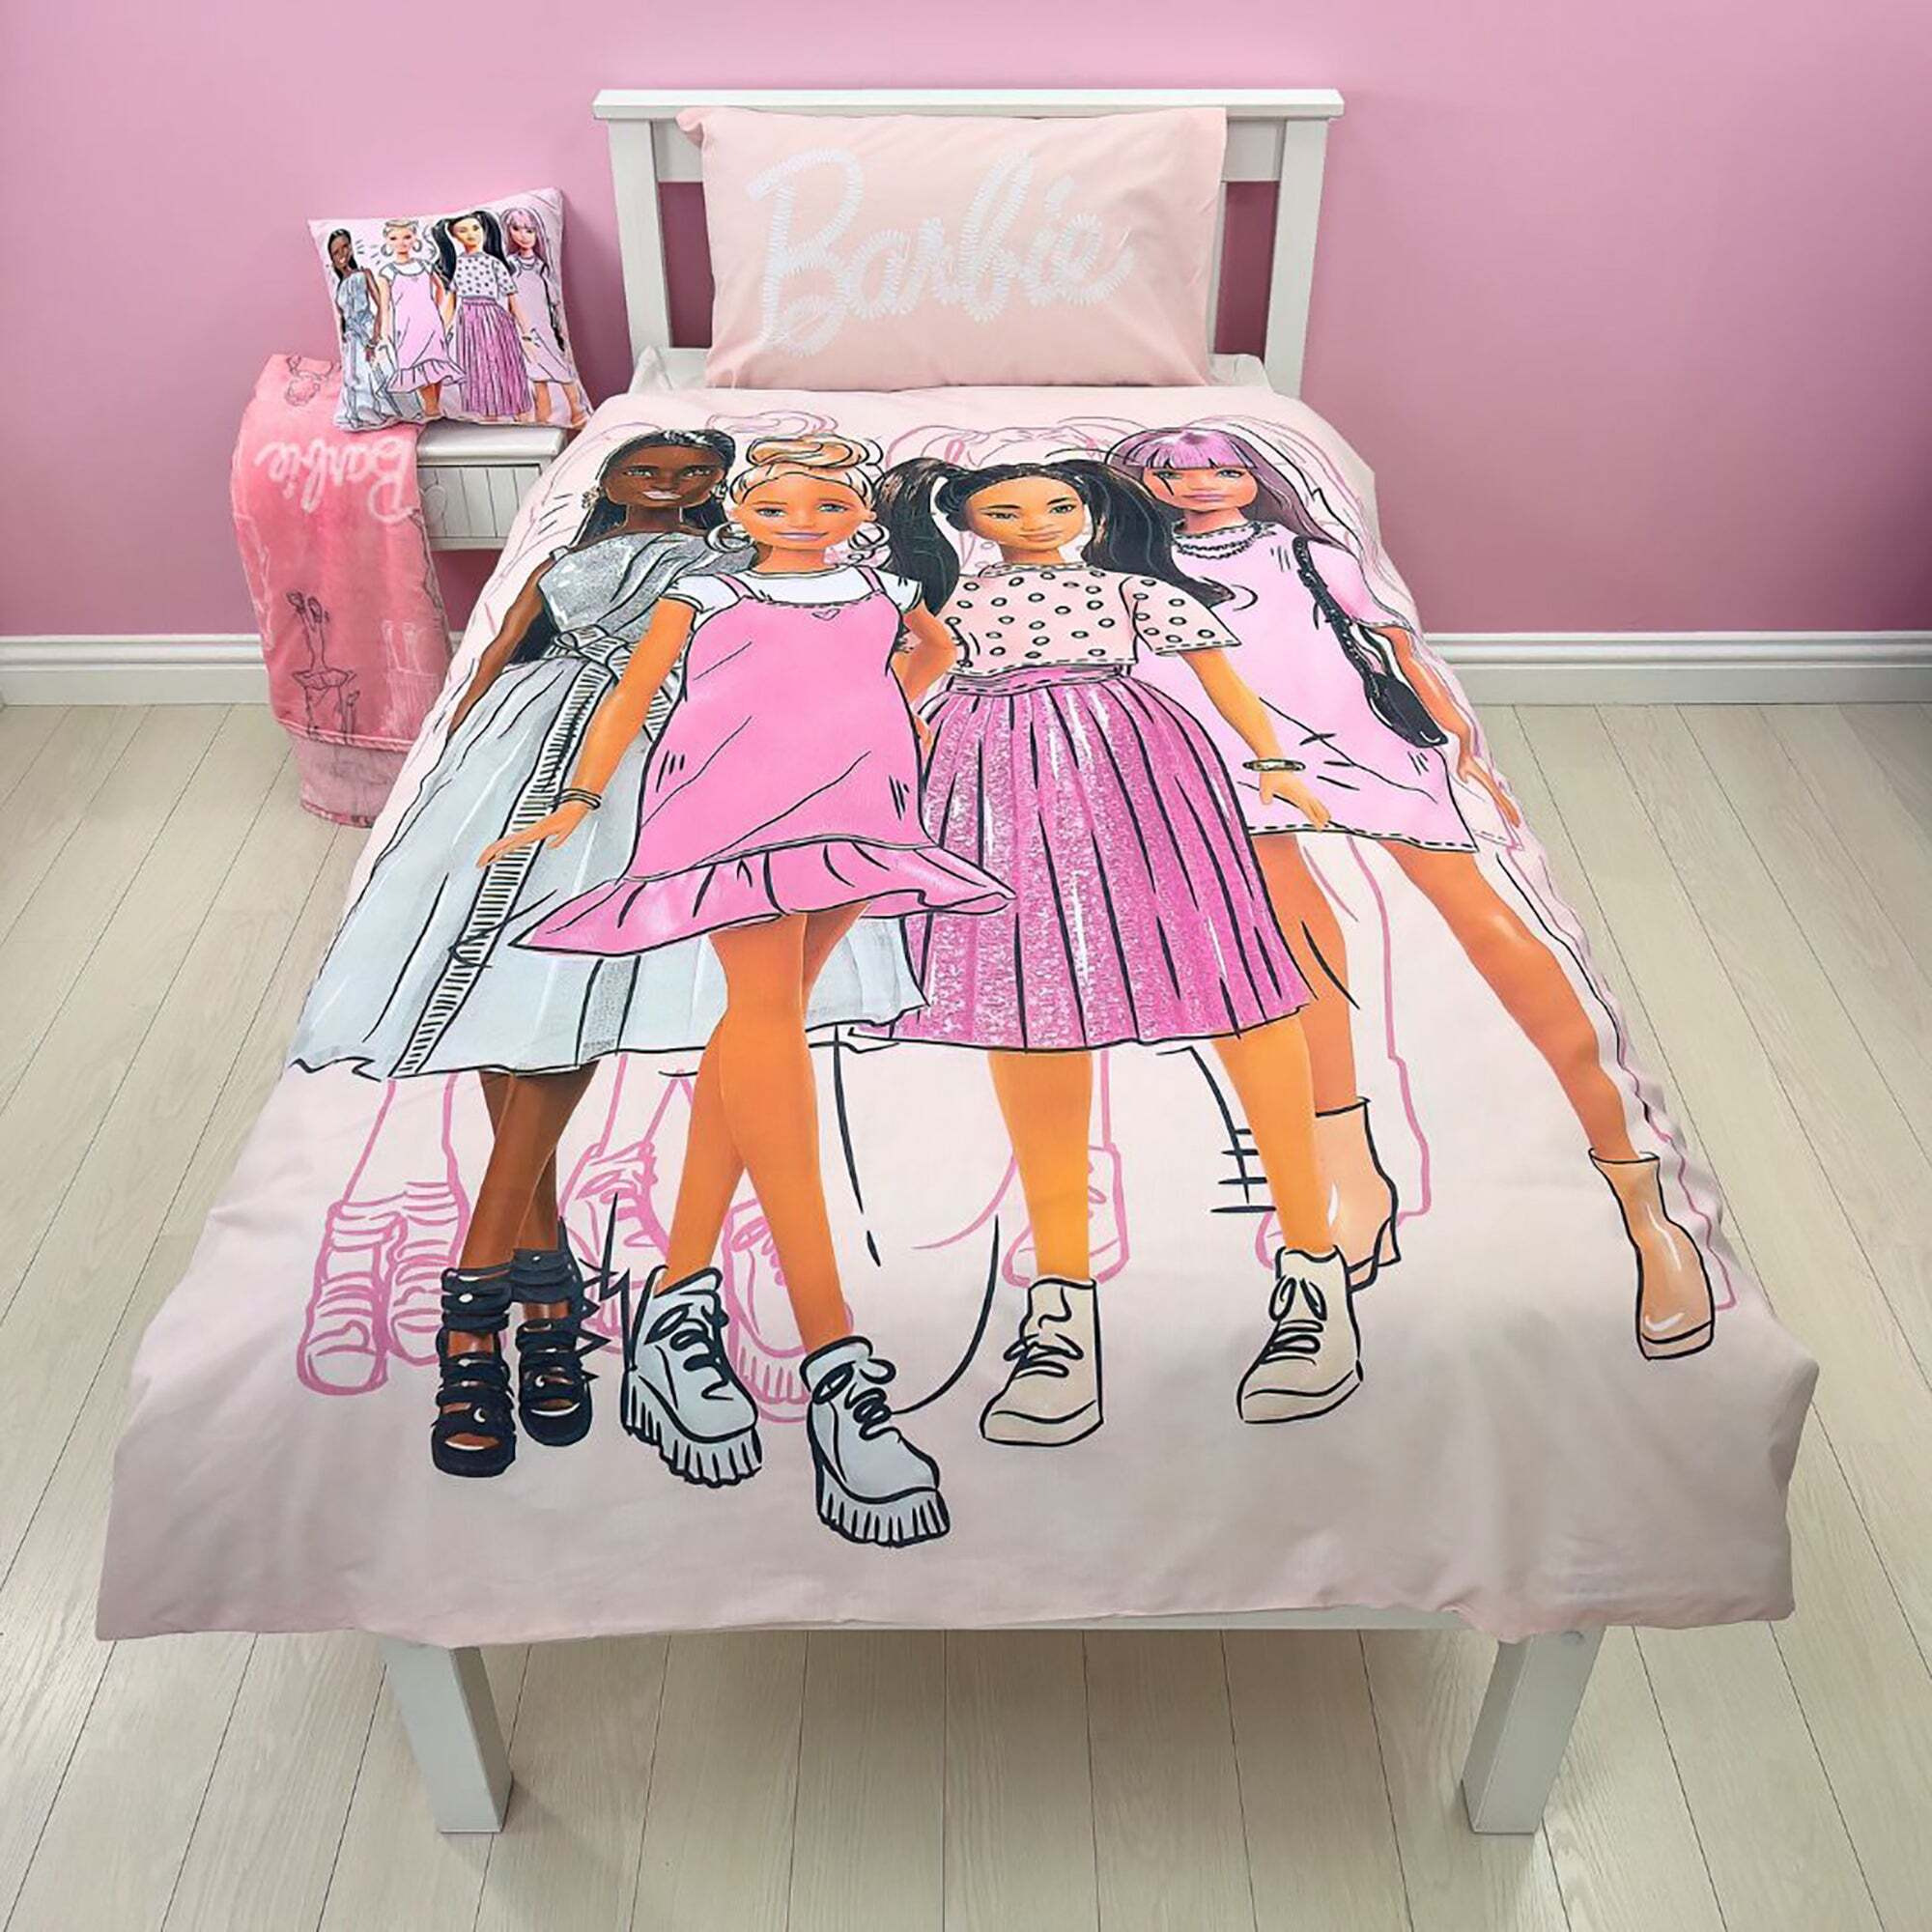 Barbie Figures Duvet Cover & Pillowcase Set, Single Pink